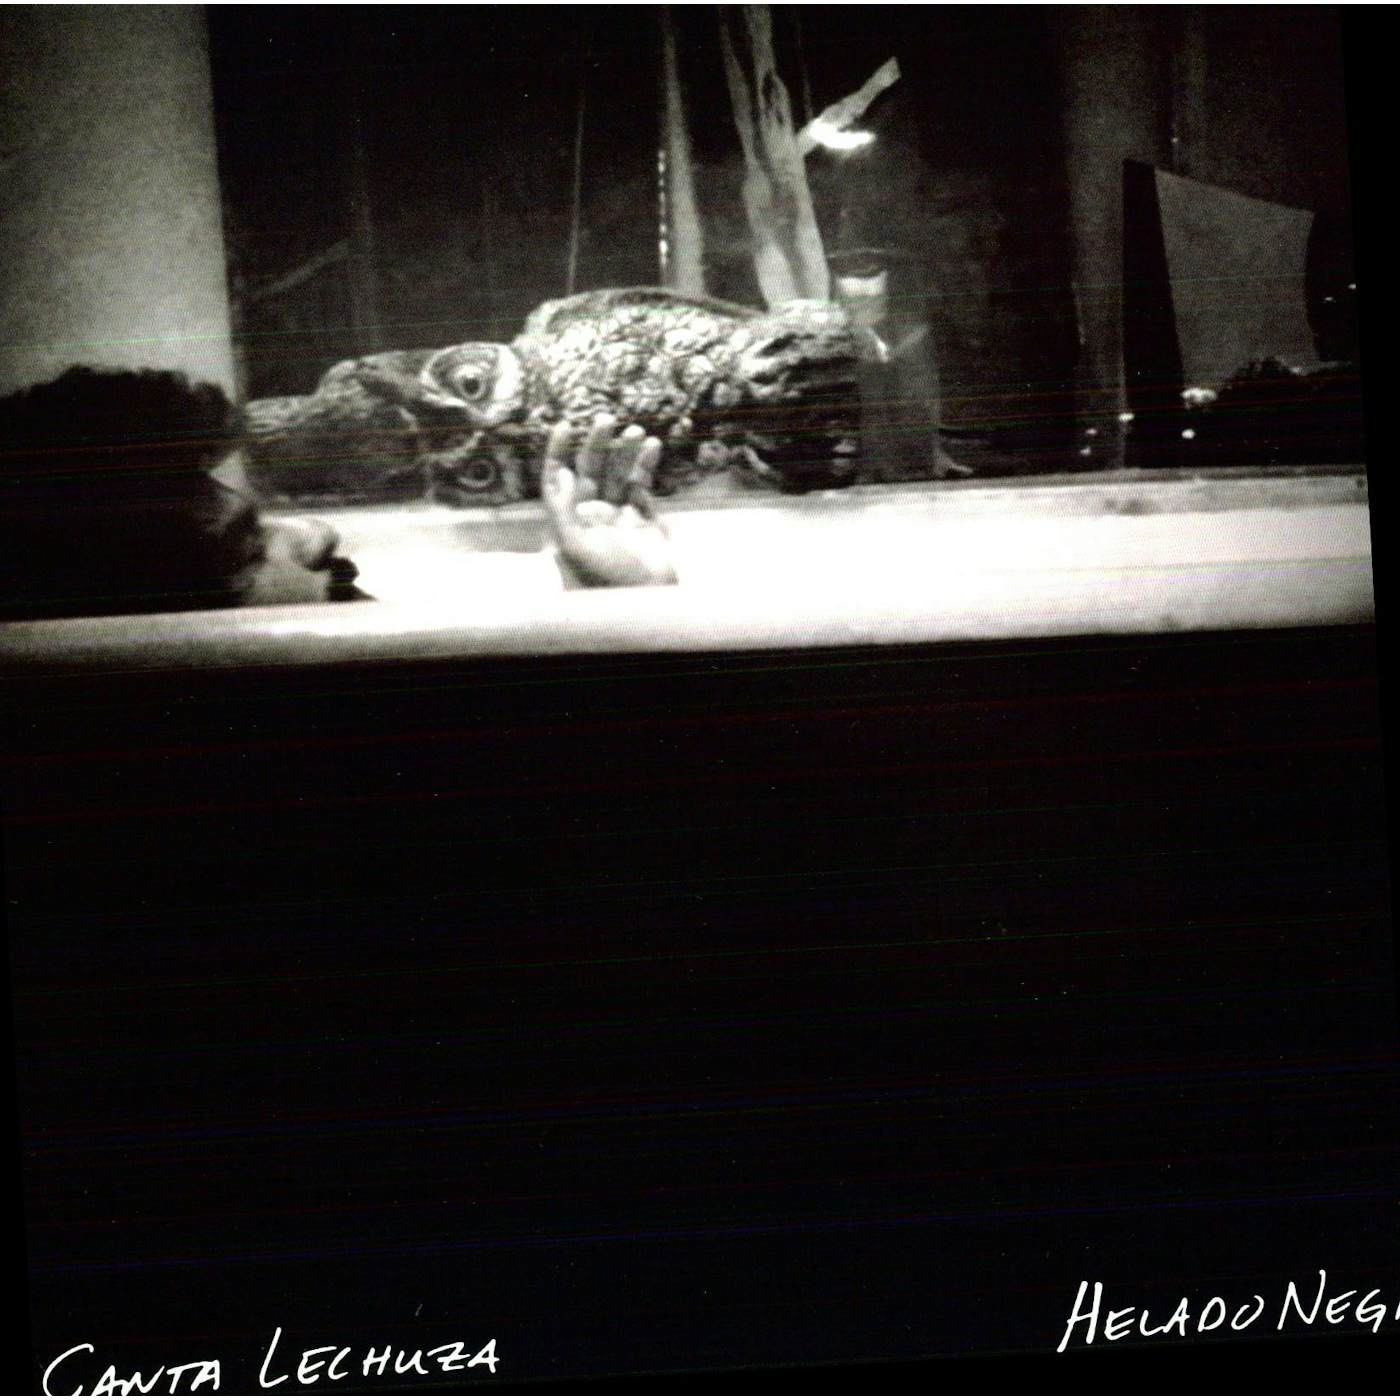 Helado Negro Canta Lechuza Vinyl Record